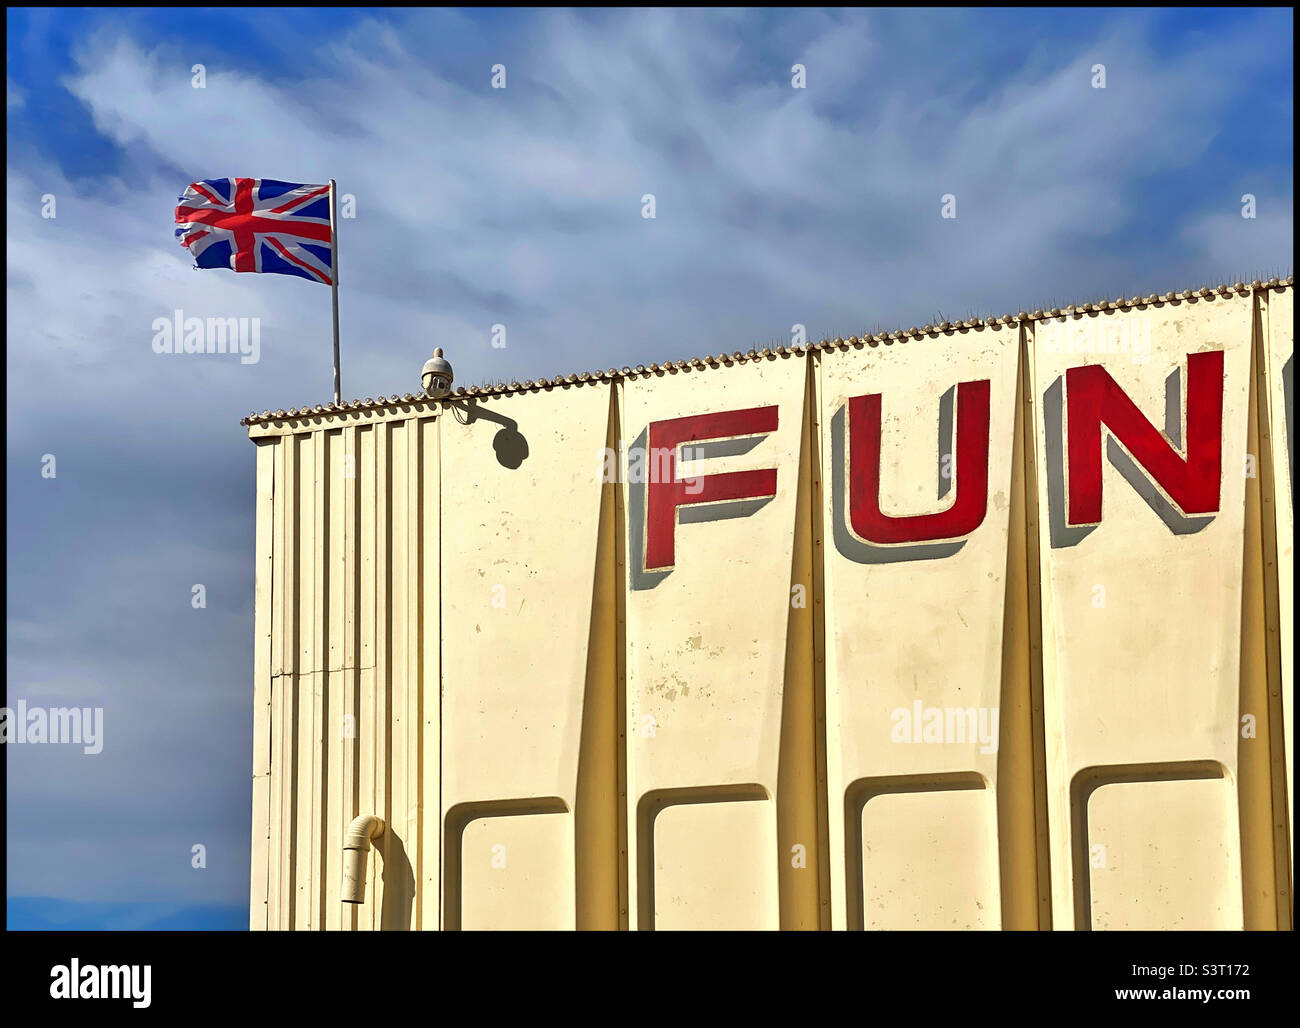 Fun and the Union Jack flag. A visual metaphor?!Photo ©️ COLIN HOSKINS. Stock Photo